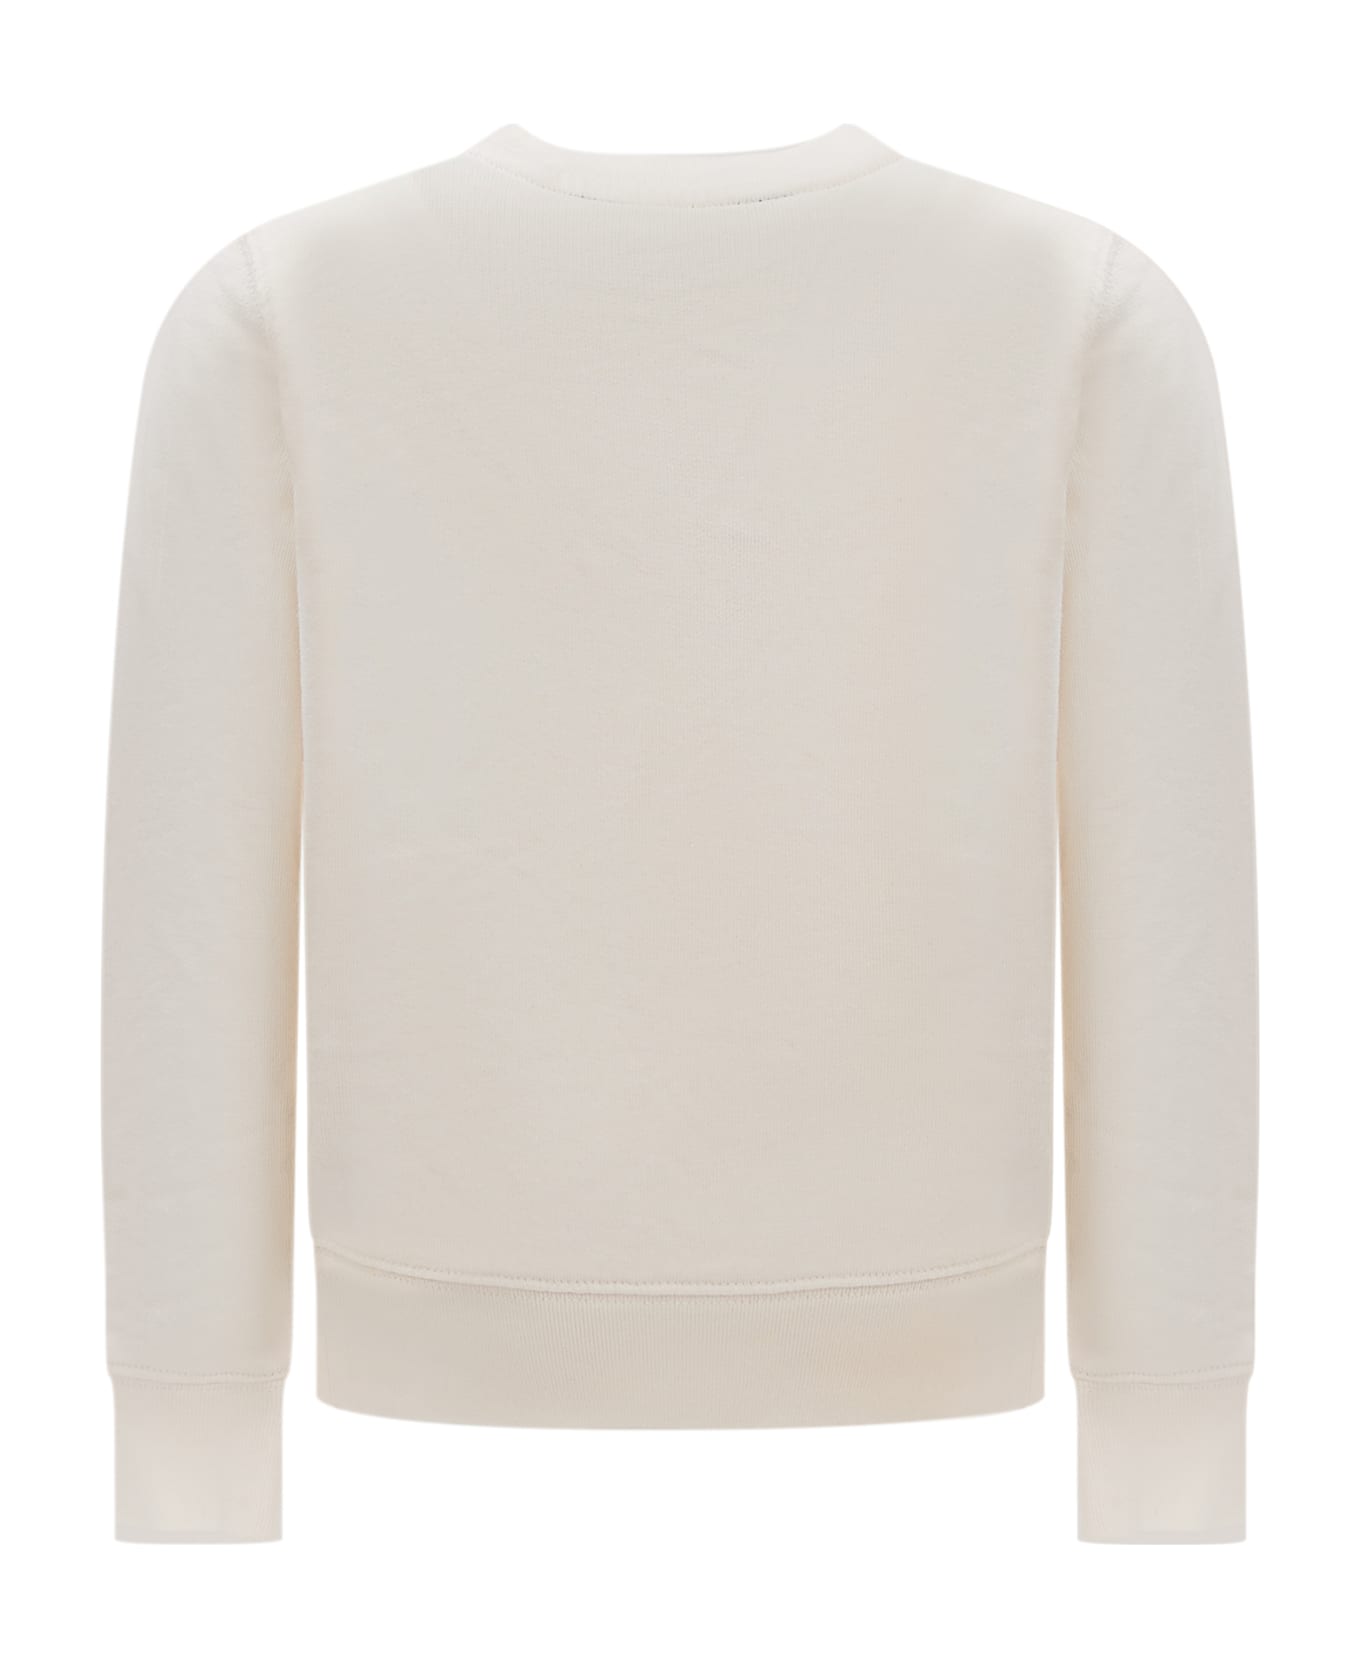 Polo Ralph Lauren Polo Bear Paris Sweatshirt - White ニットウェア＆スウェットシャツ